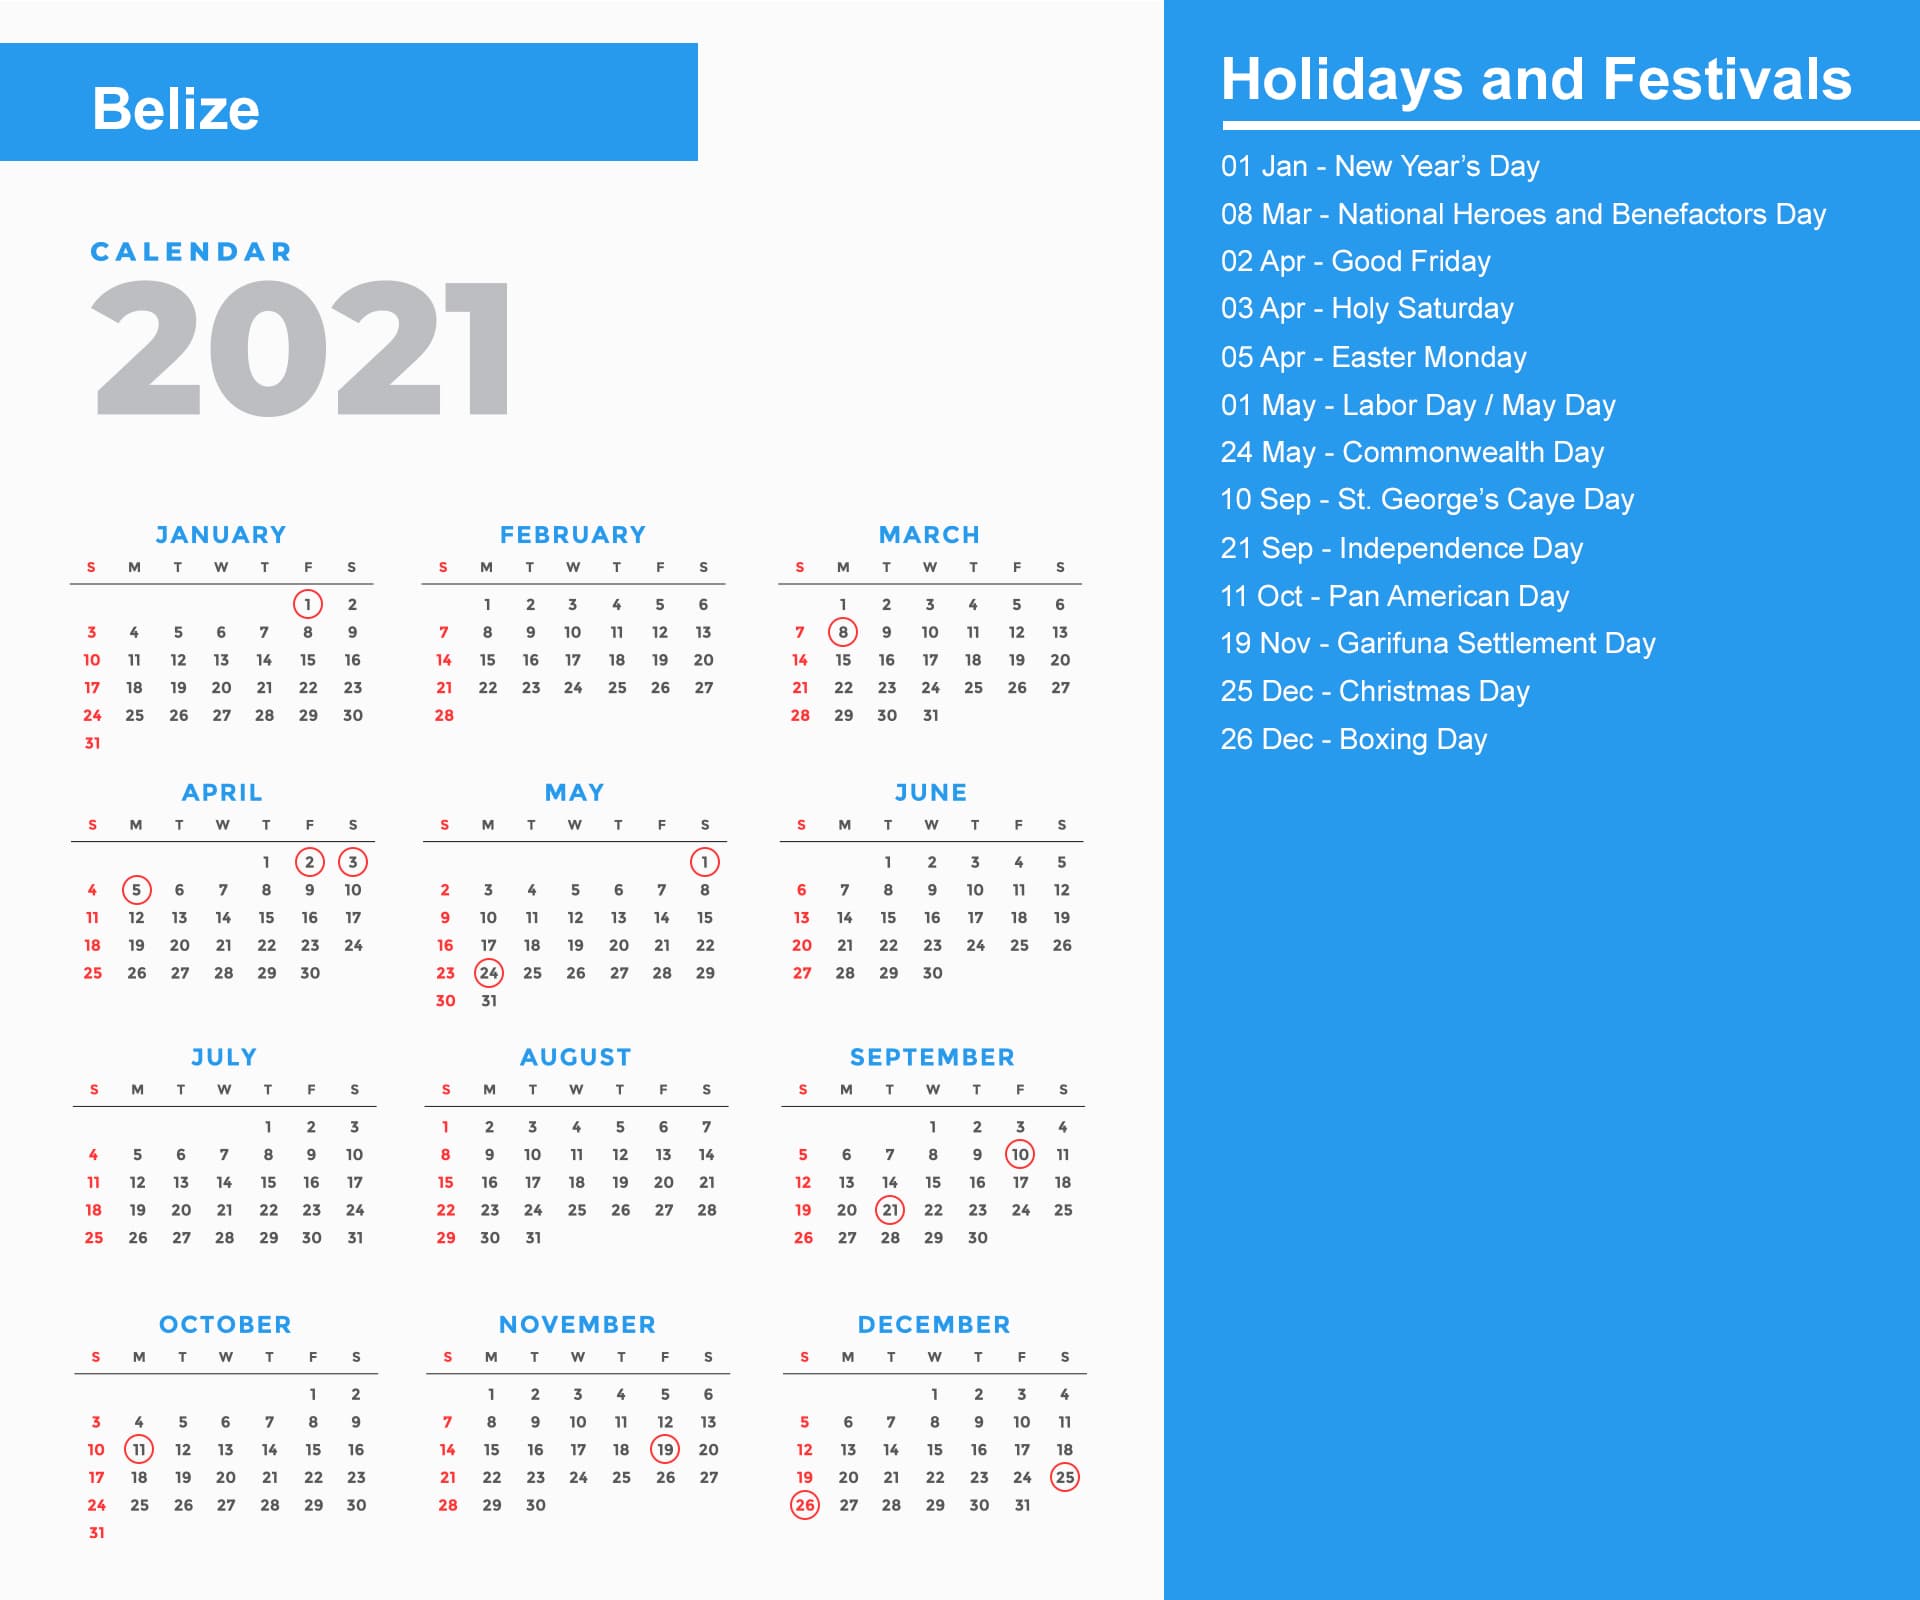 Belize Holidays Calendar 2021